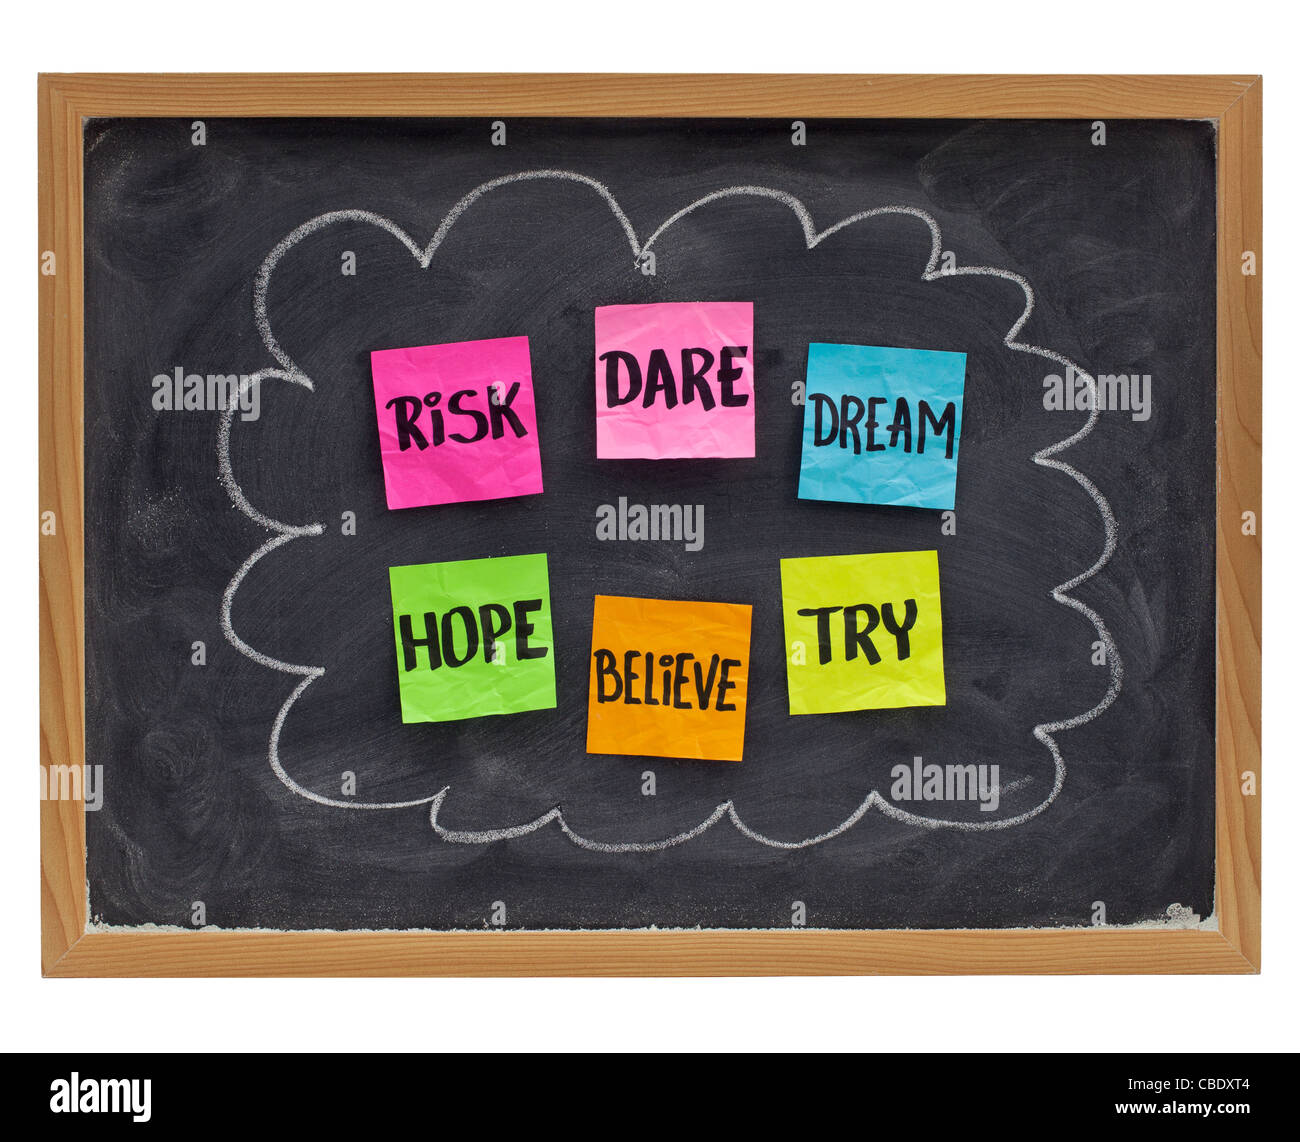 motivational concept (hope, believe, dare, risk, try,dream) - sticky notes on blackboard Stock Photo